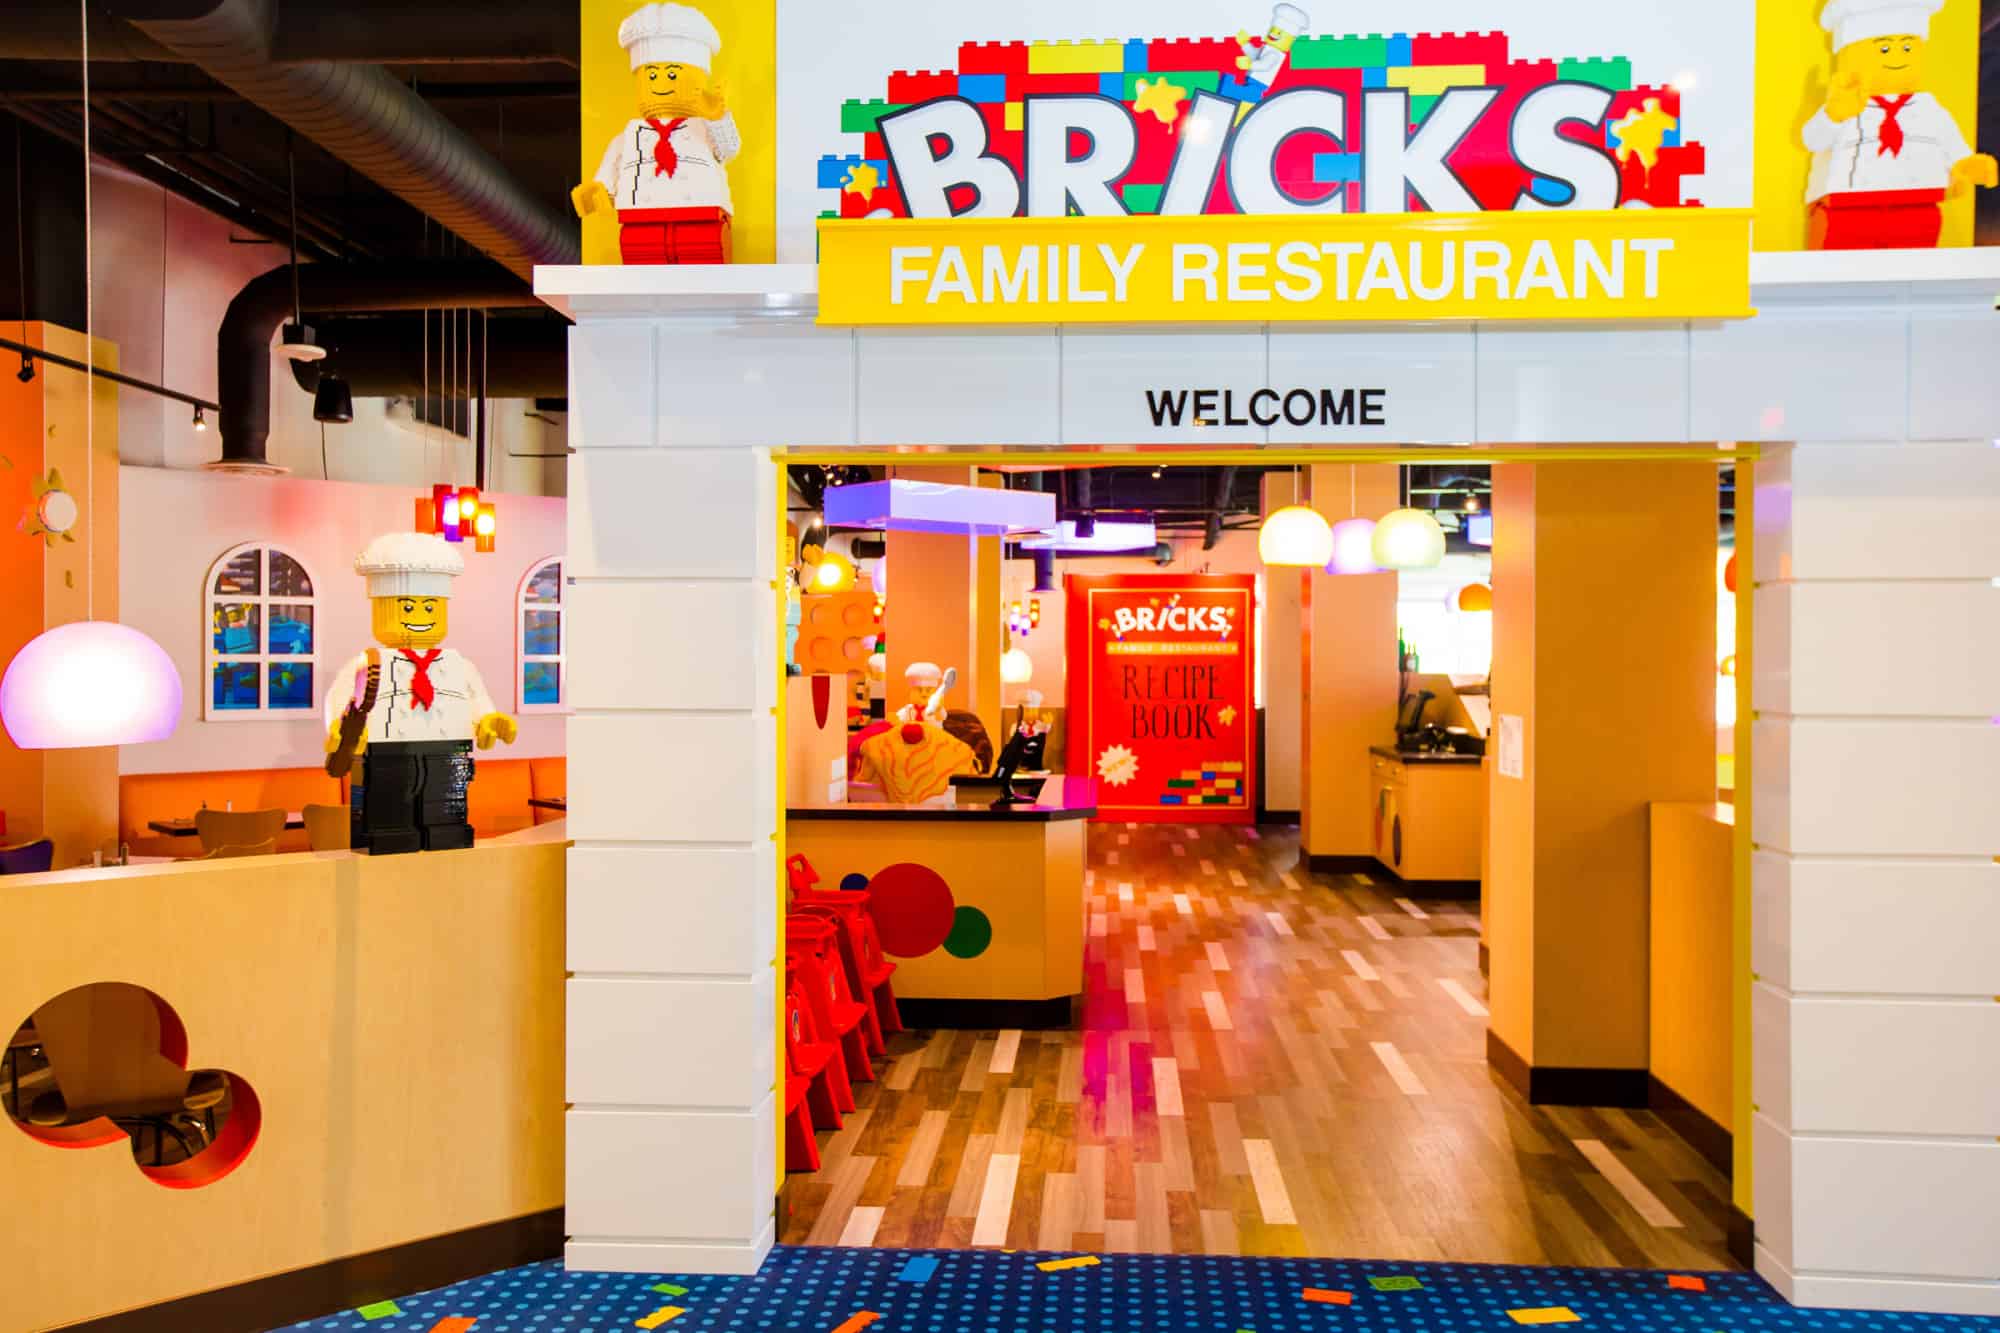 Bricks Family Restaurant  (PHOTO / Chip Litherland for LEGOLAND Florida/Merlin Entertainments Group Inc.)